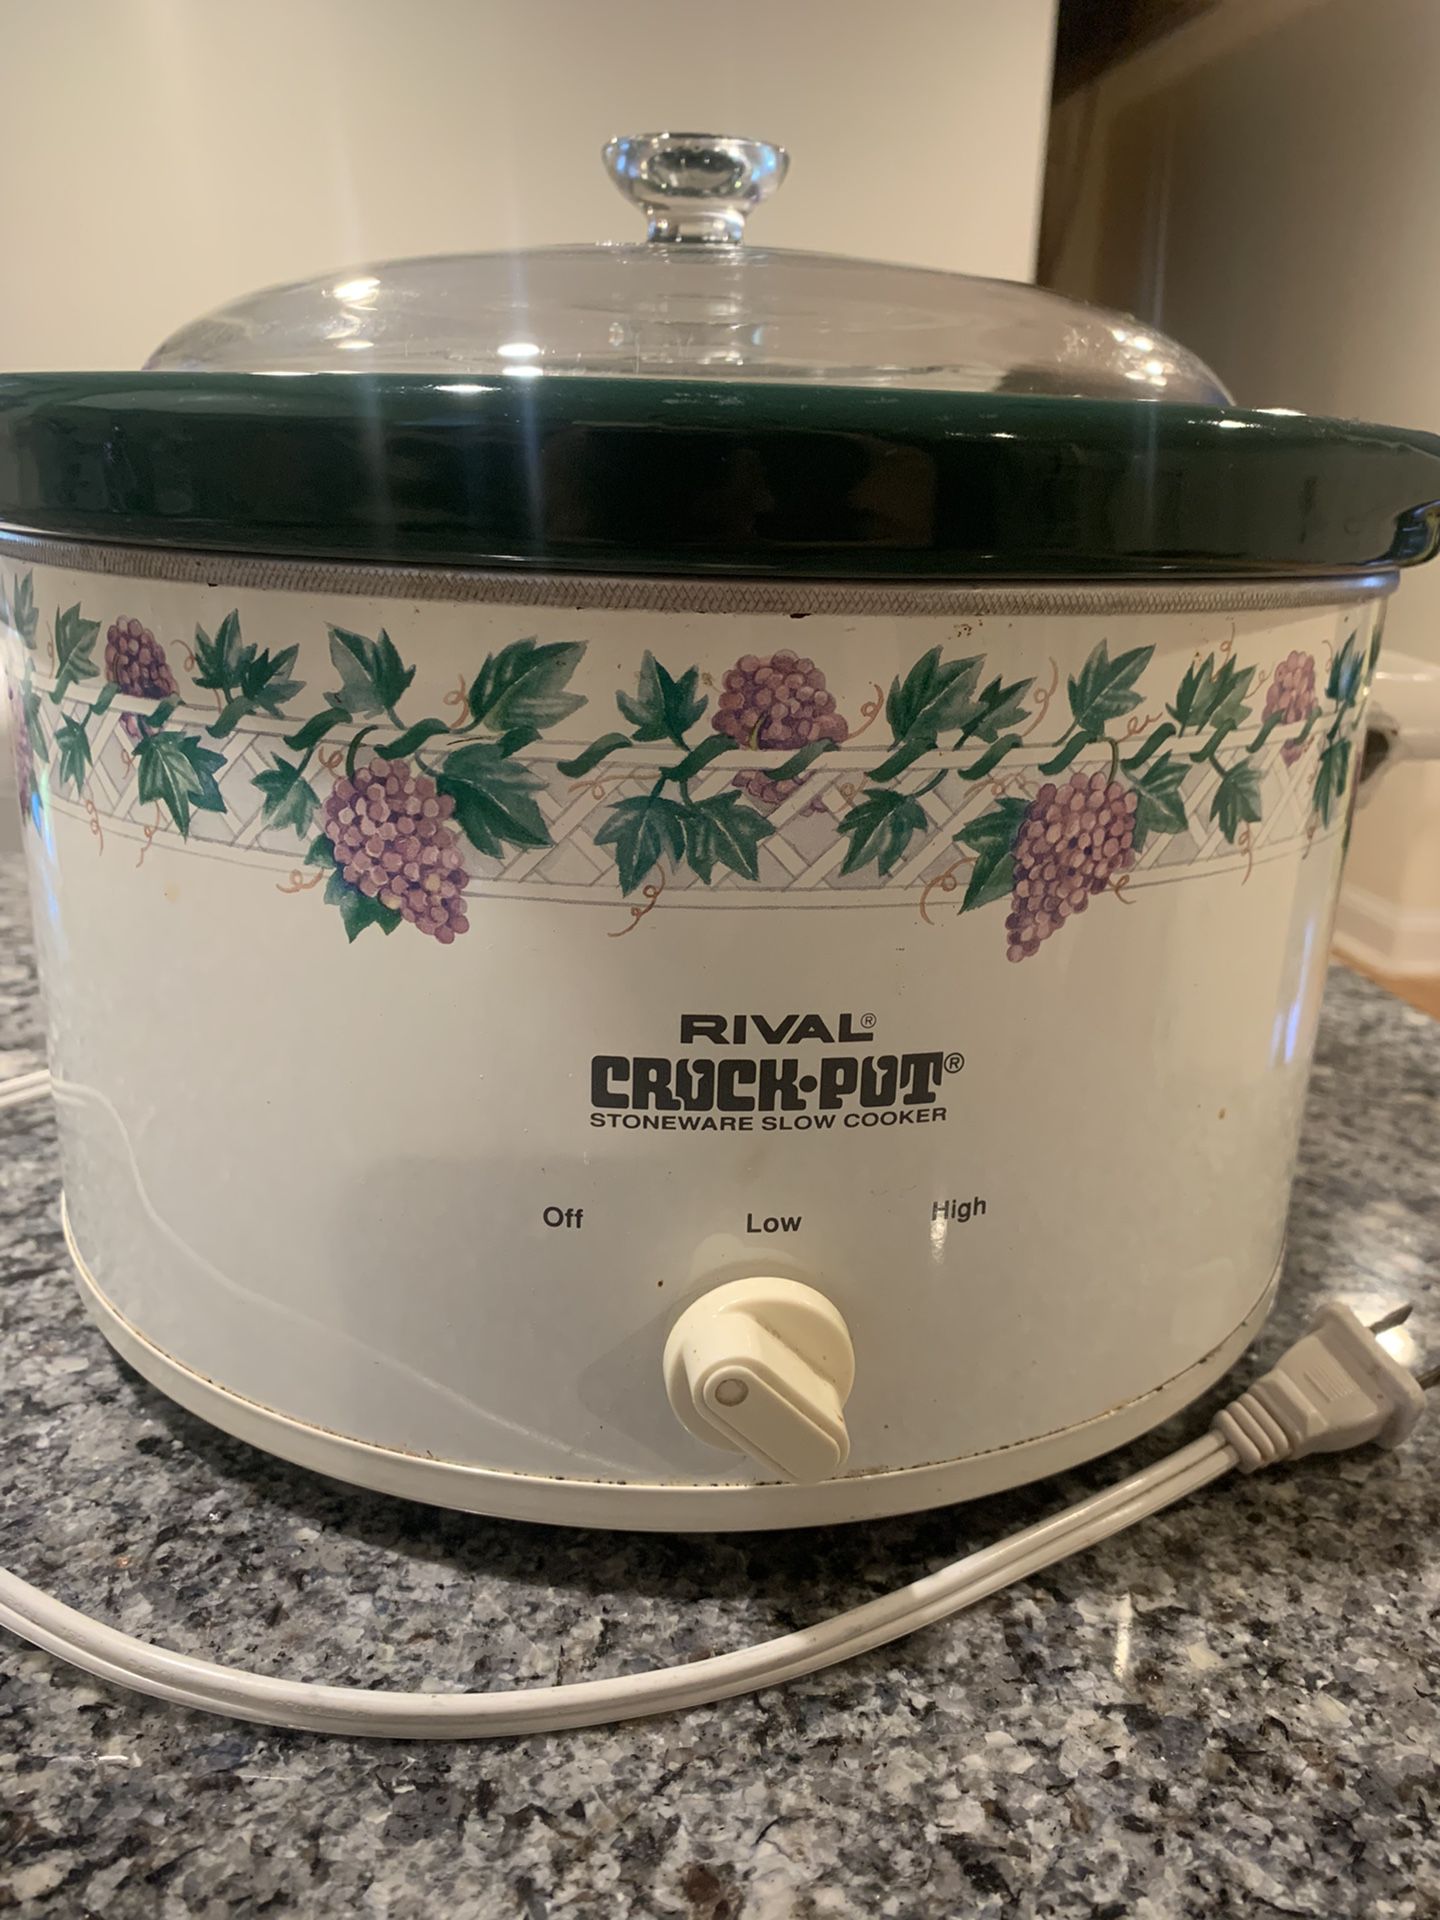 Vintage Rival Crock Pot for Sale in Avon, MA - OfferUp